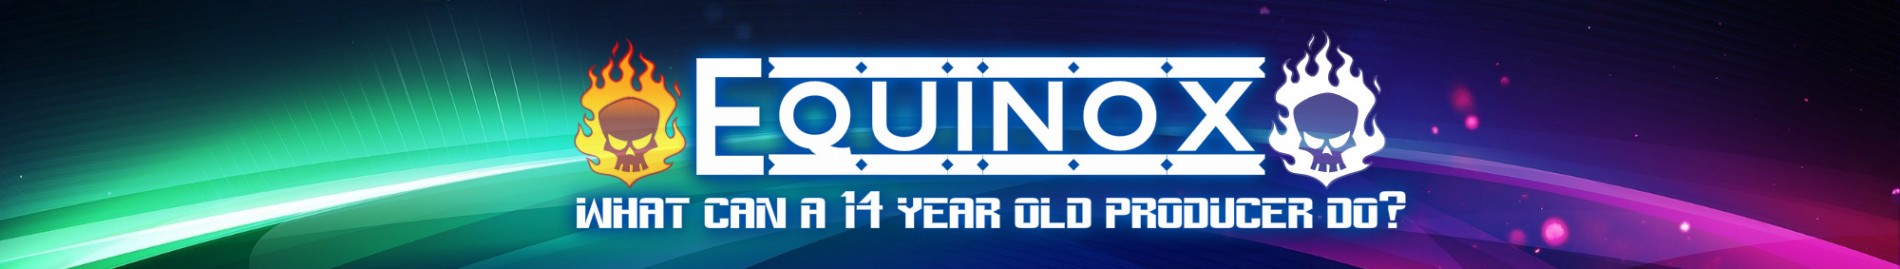 Equinox official